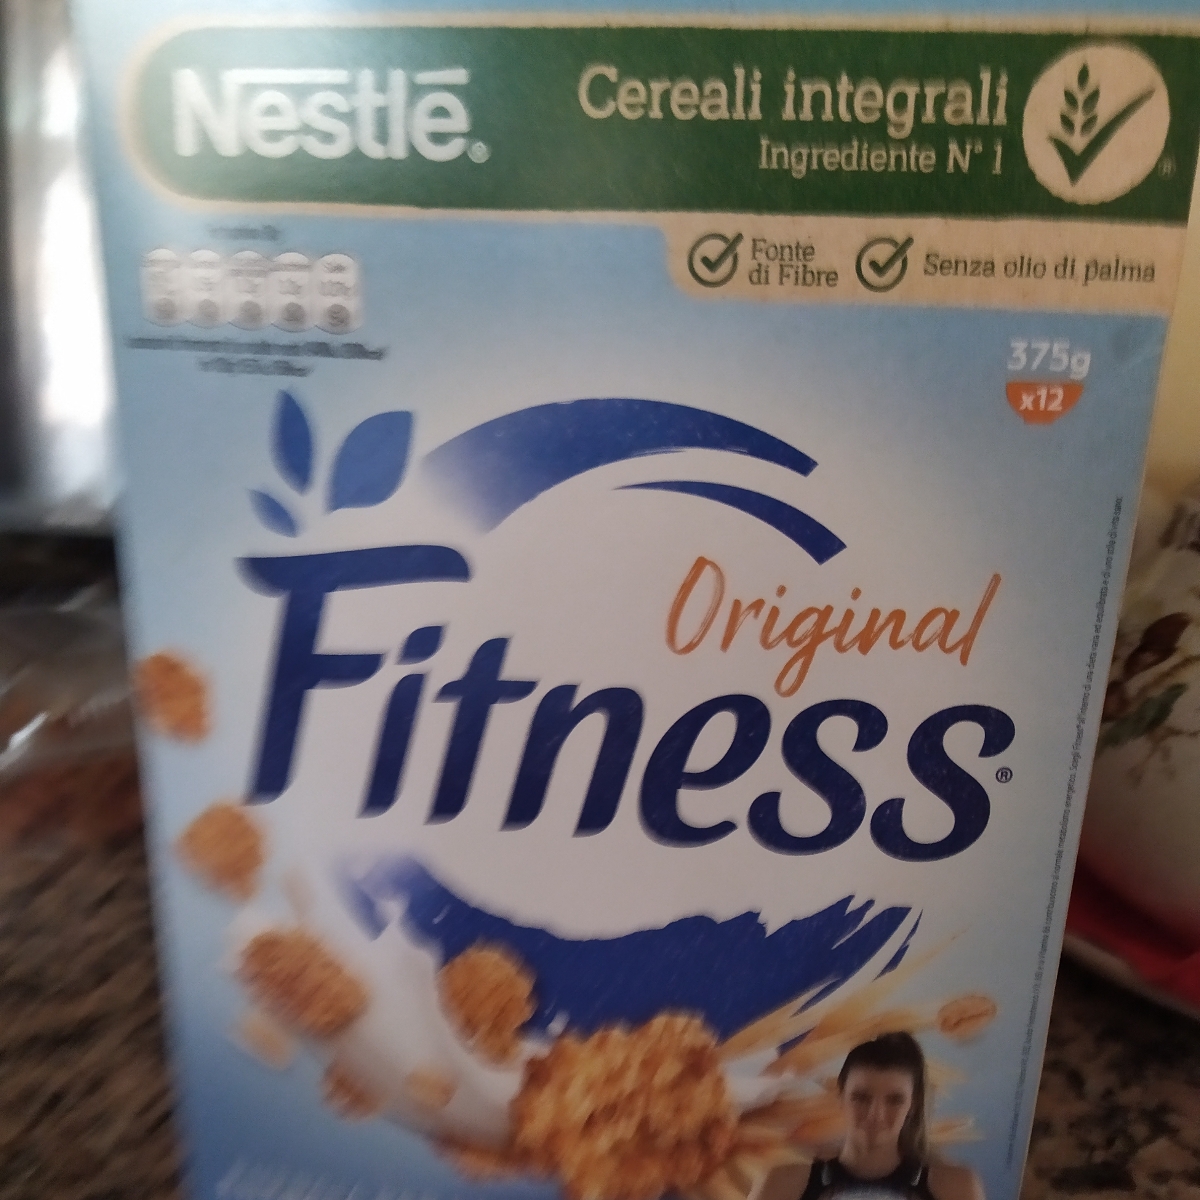 Nestlé Cereali integrali Review